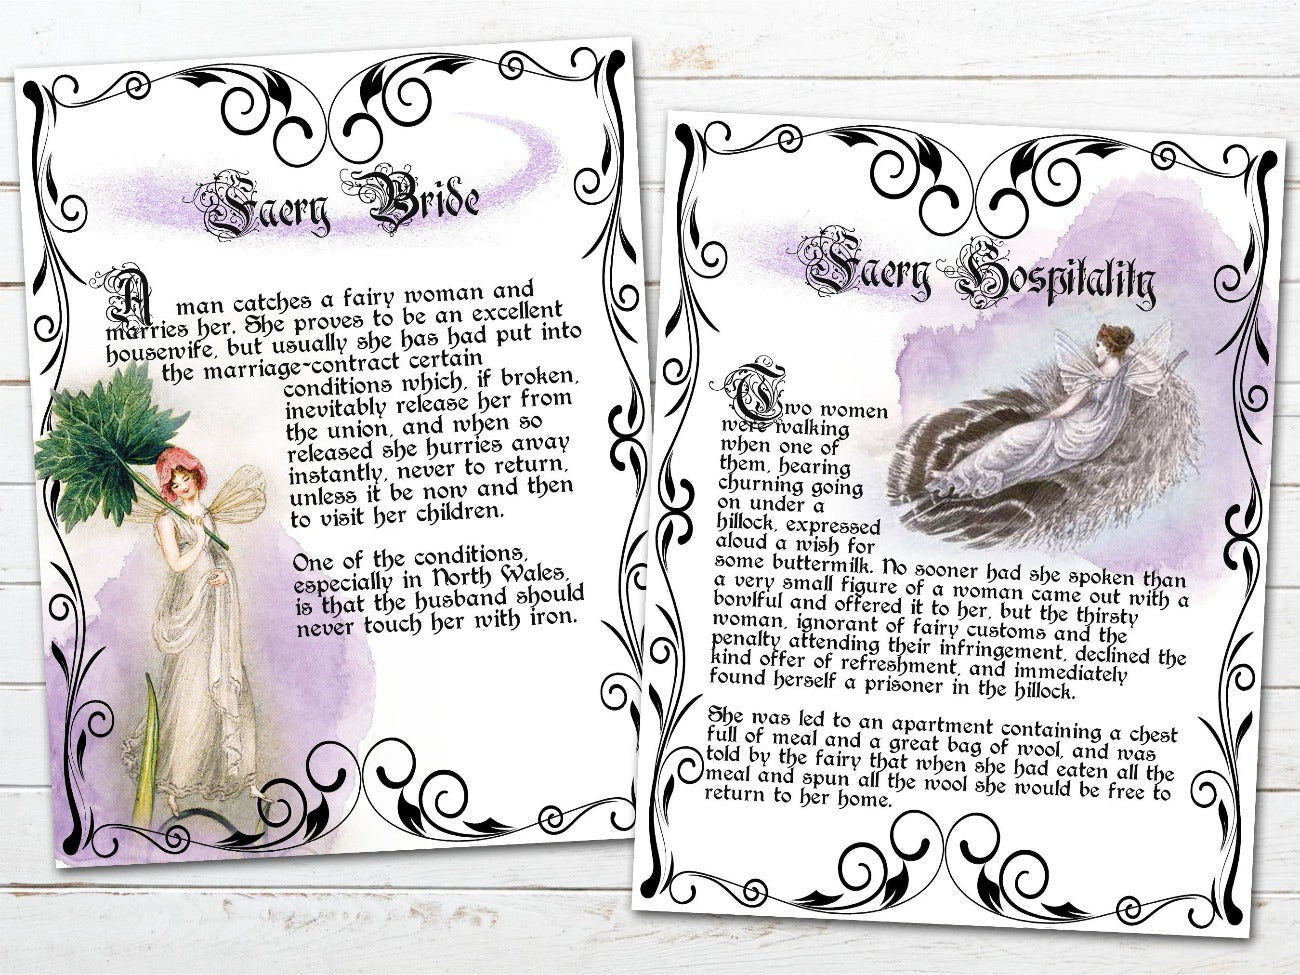 Faery Bride, Faery Hospitality pages - Morgana Magick Spell